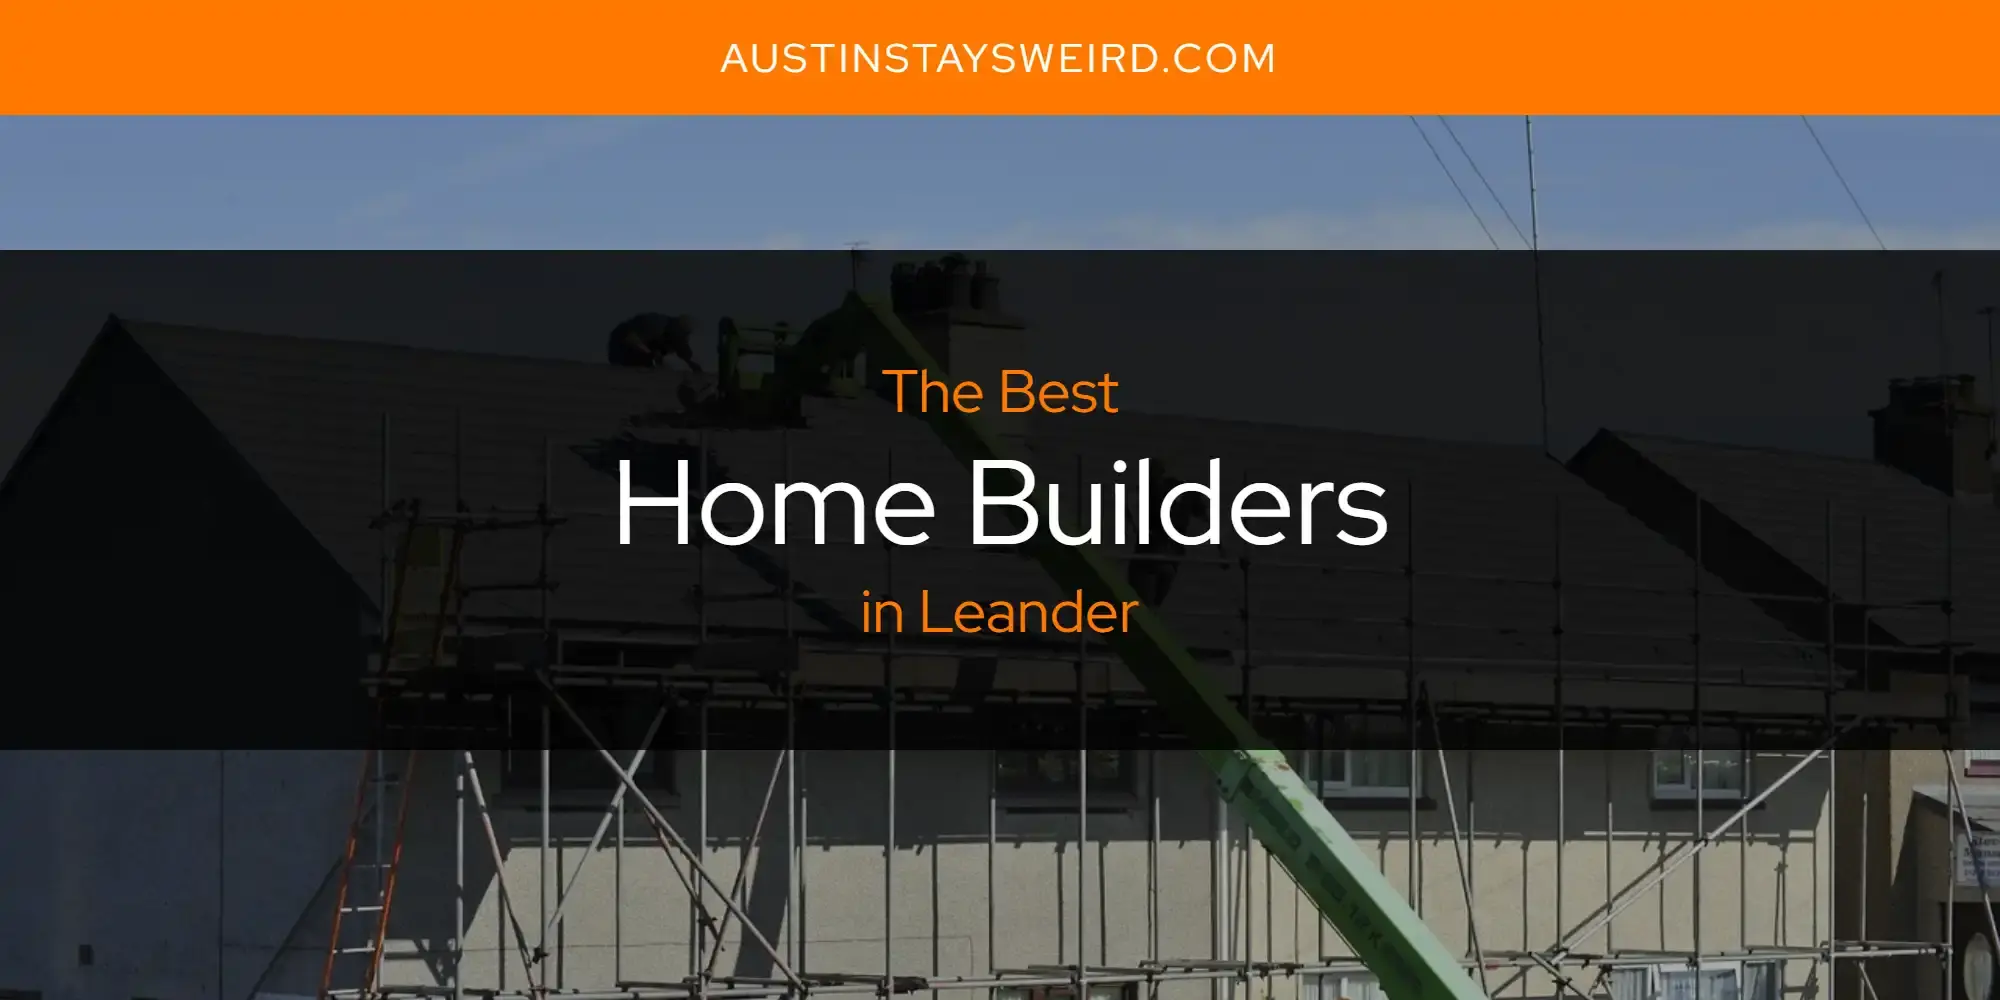 Best Home Builders in Leander? Here's the Top 8